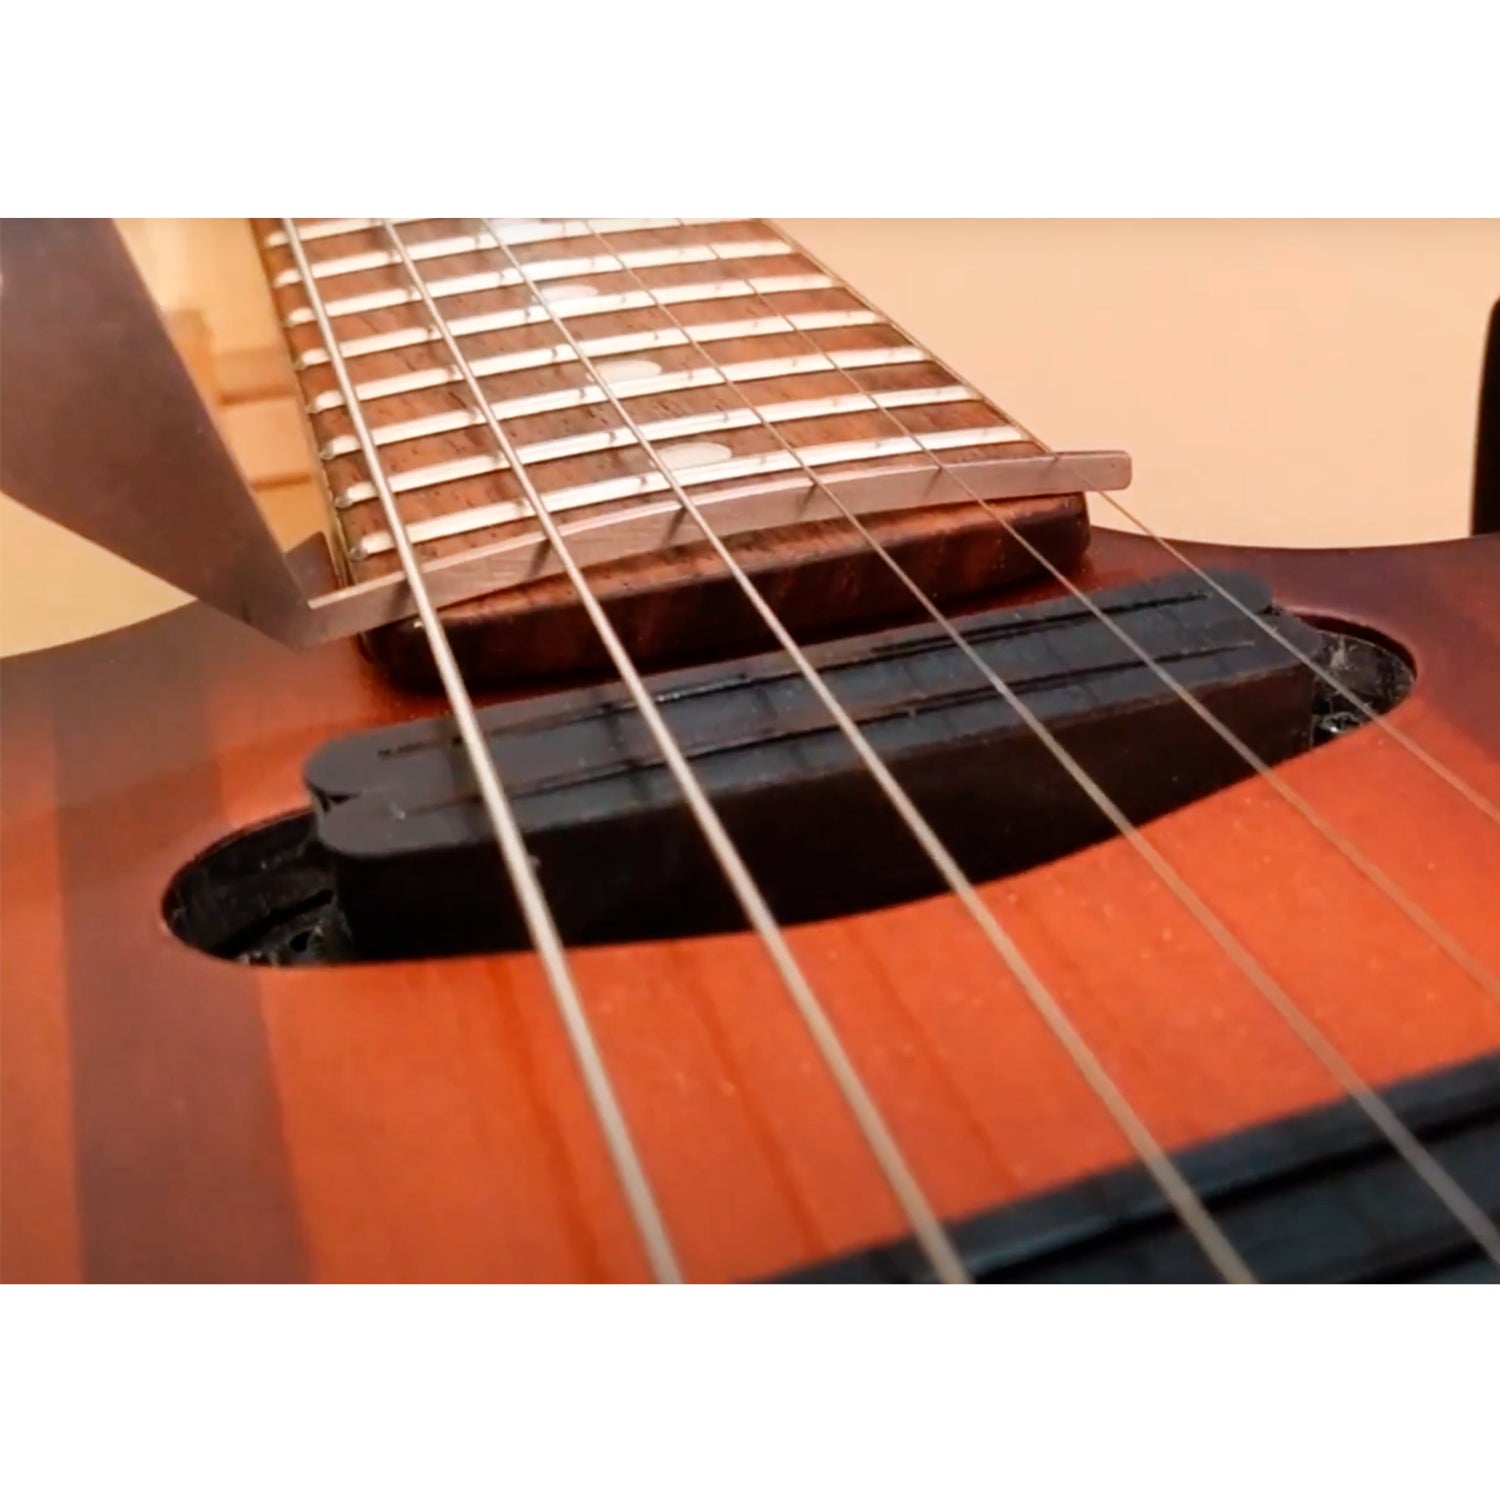 Understring Radius Gauge for Guitar & Bass Fingerboard Stainless